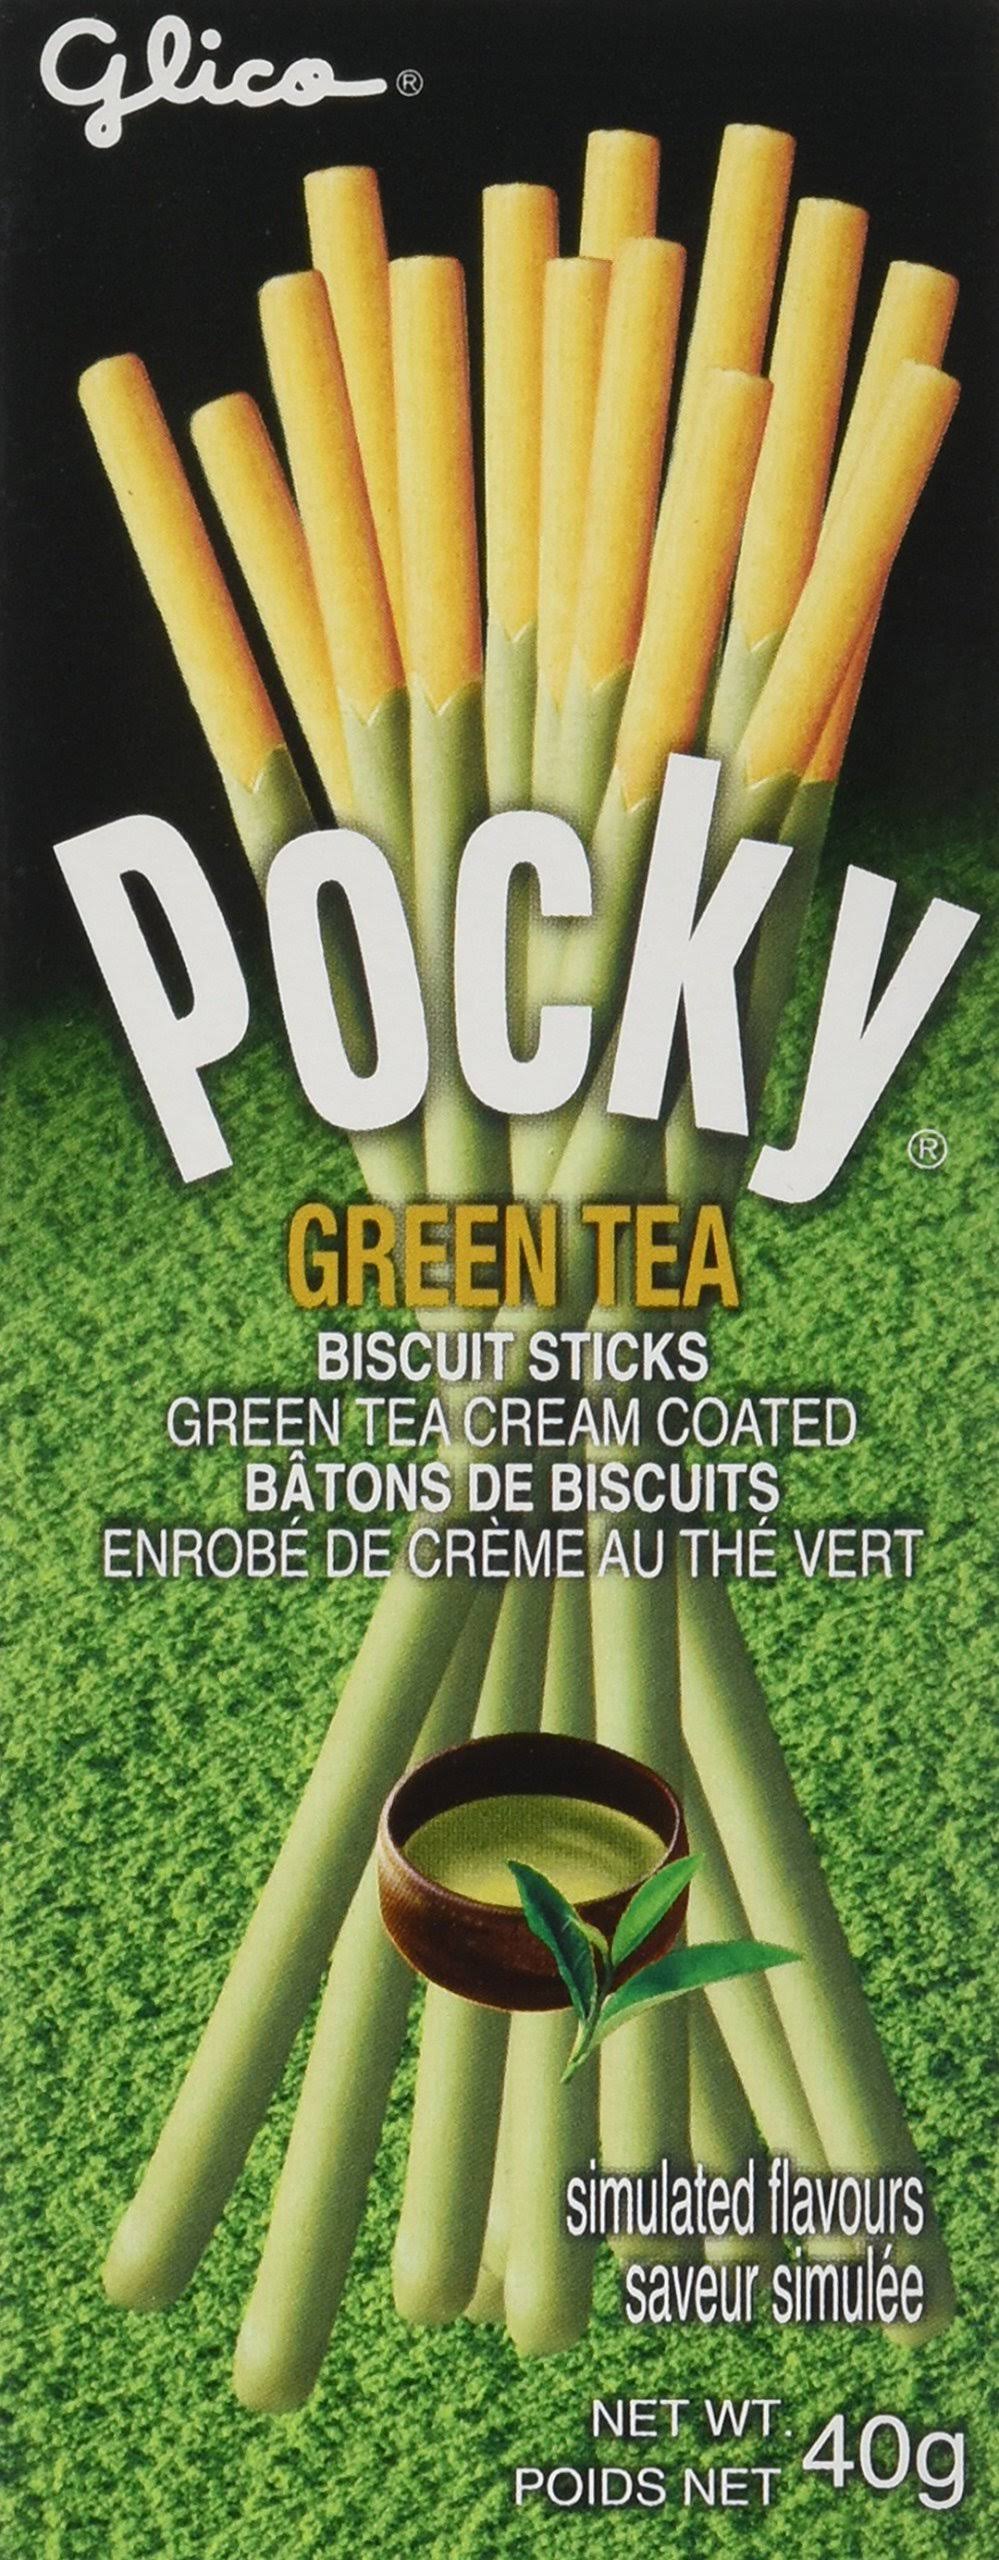 Pocky Biscuit Sticks - Green Tea